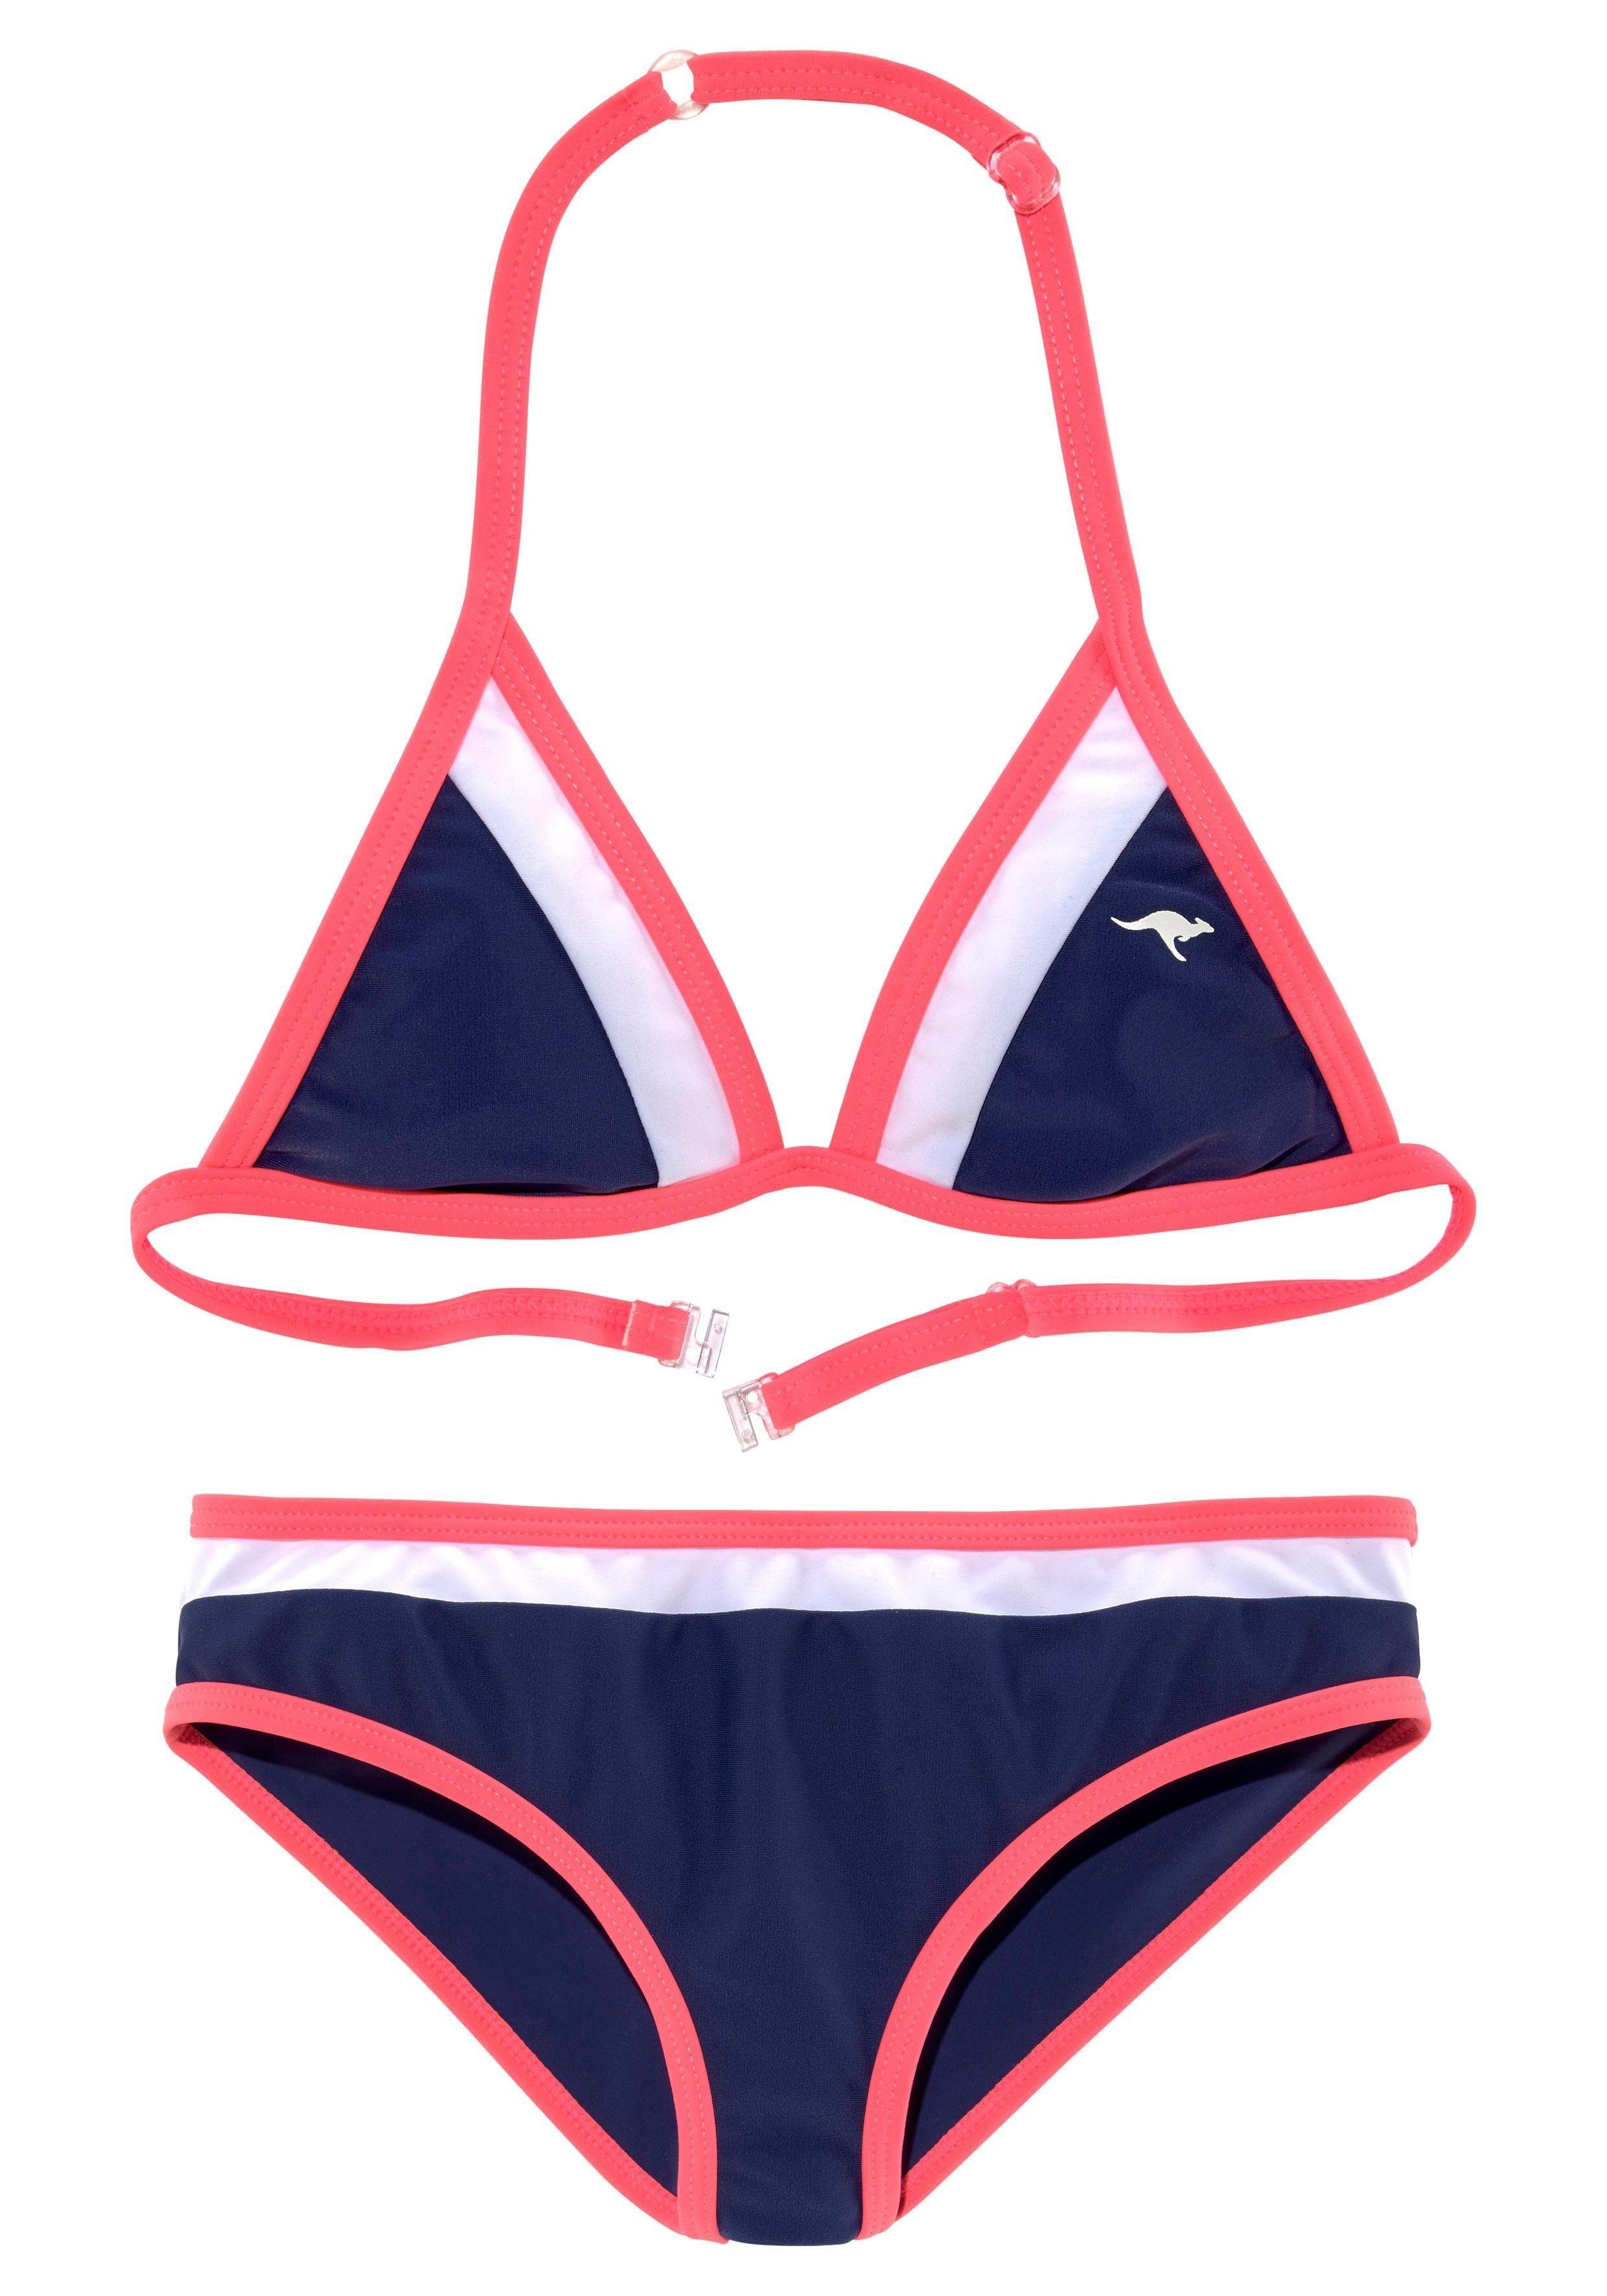 [Versand am selben Tag] KangaROOS Triangel-Bikini Energy Kids Colorblocking-Design coolen im